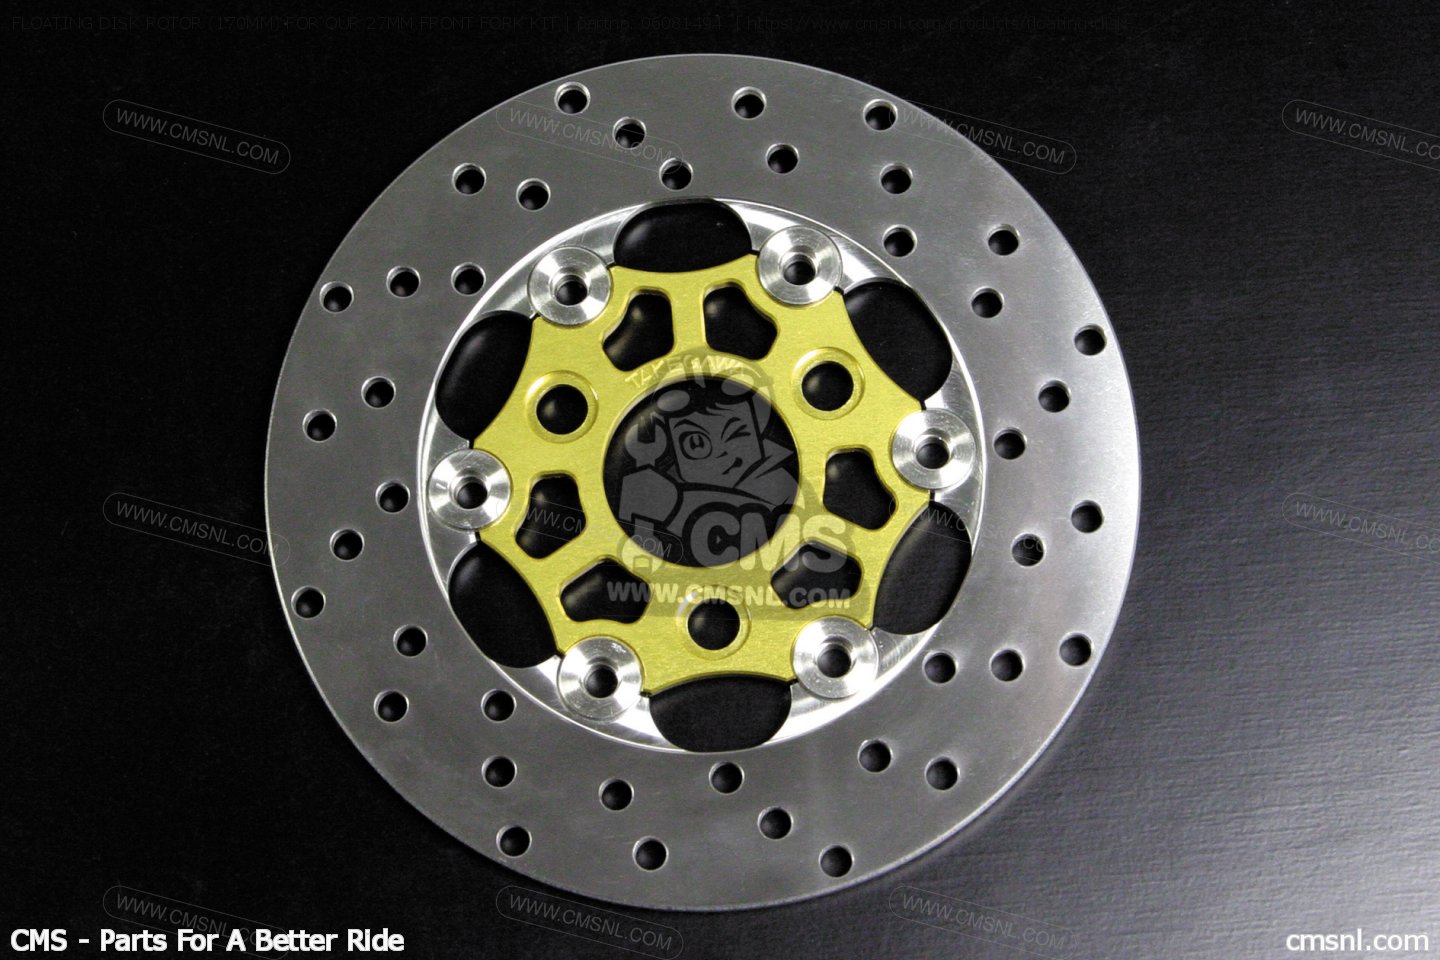 06081494: Floating Disk Rotor (170mm) For Our 27mm Front Fork Kit